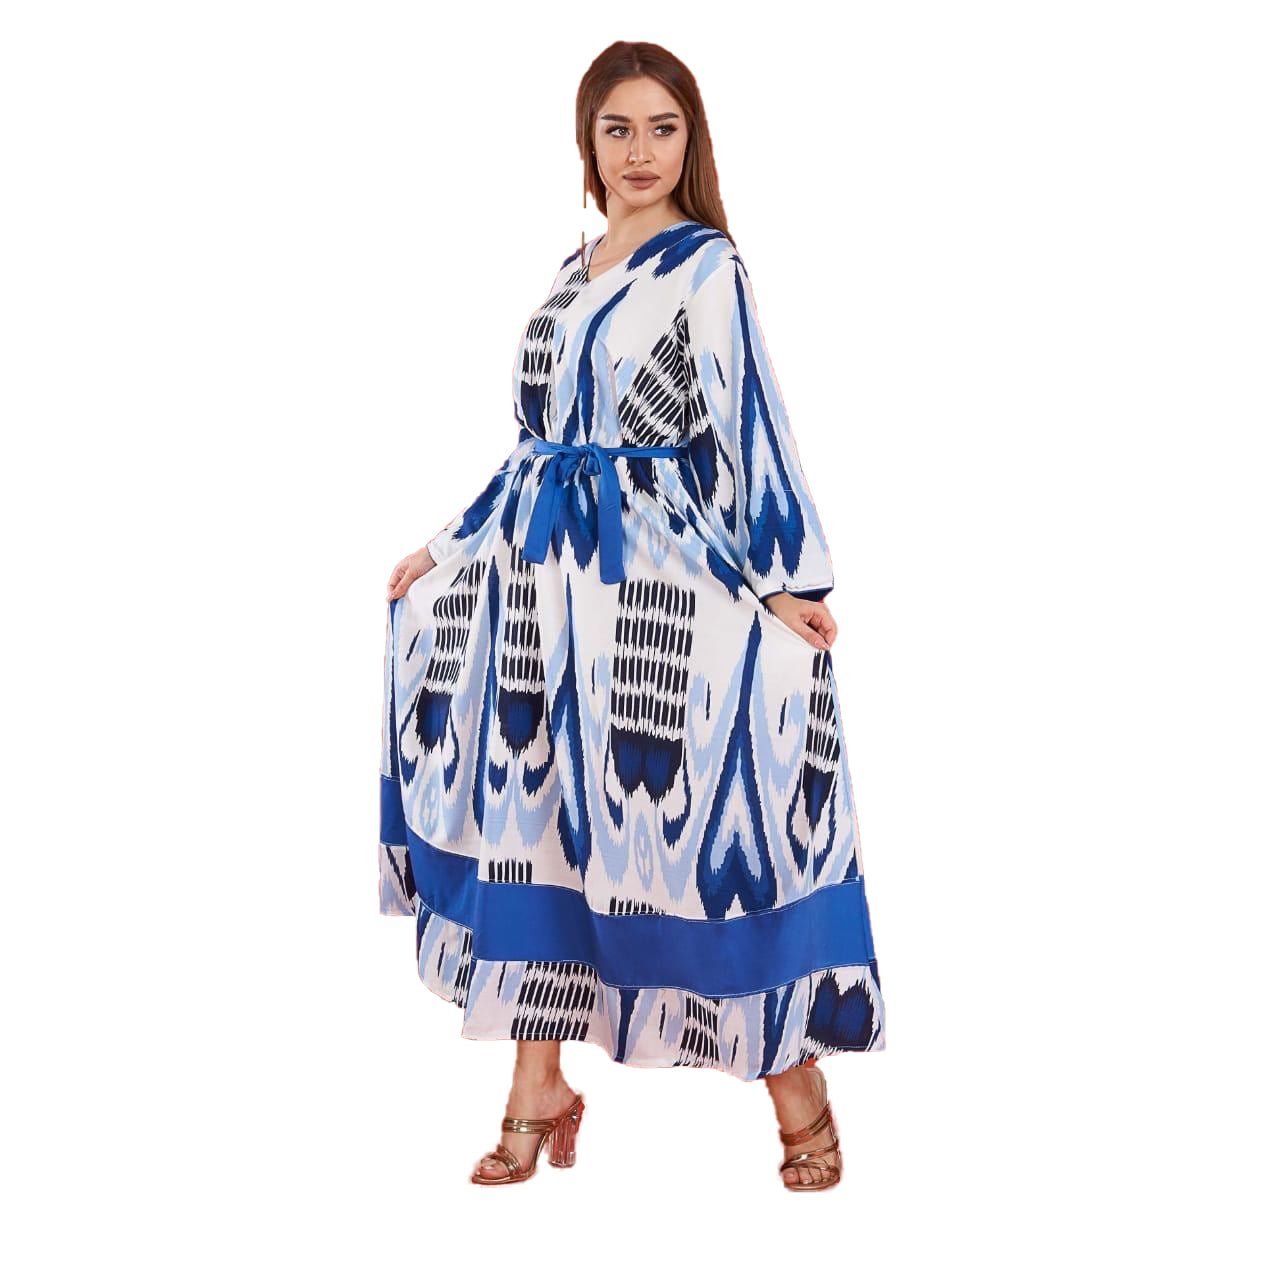 ABAYA Dubai with belt blue multi colors plaid for woman clothing